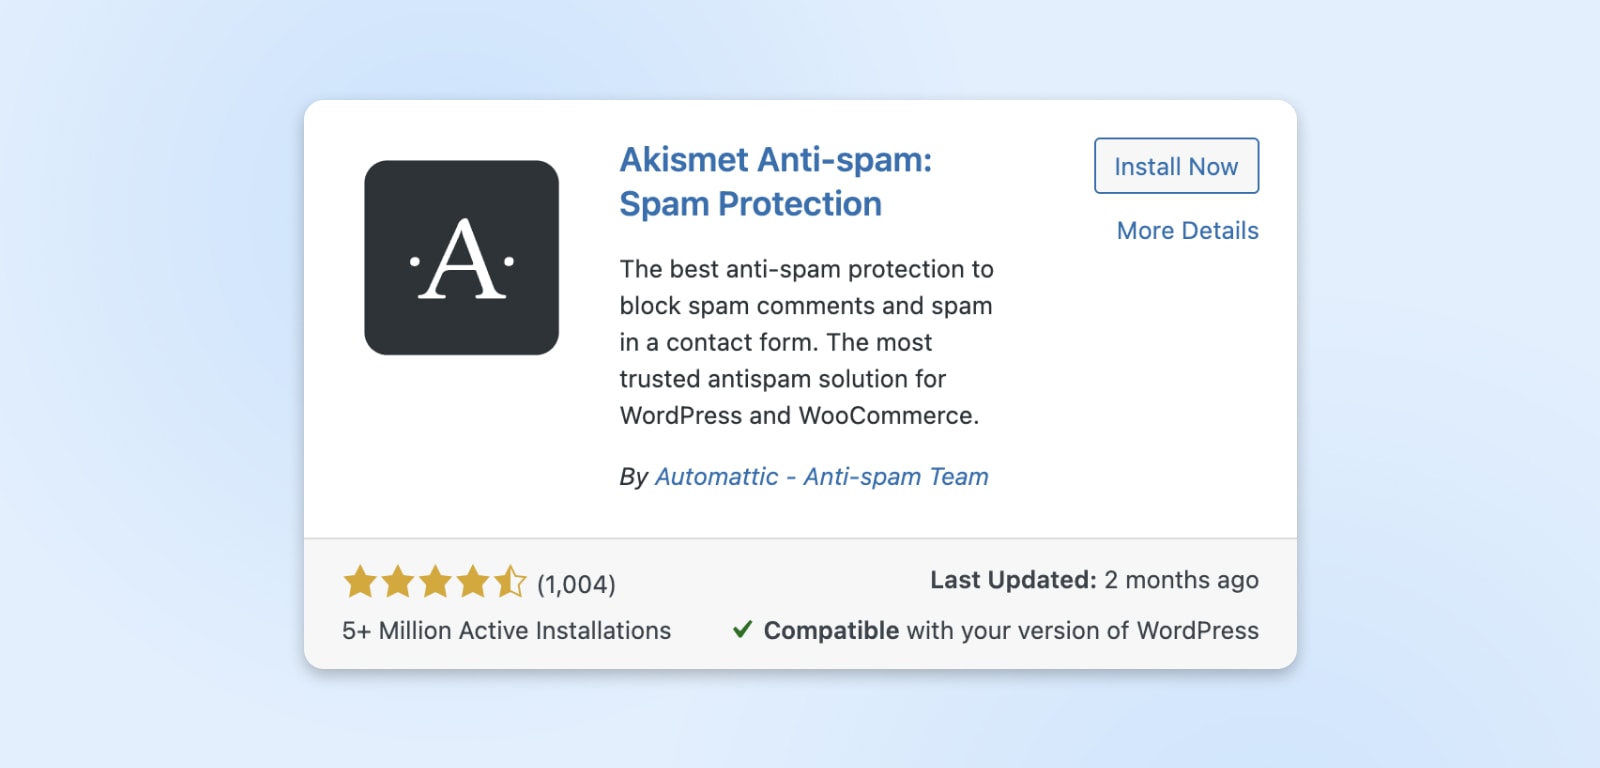 "Akismet Anti-spam: Spam Protection" dialog box. 